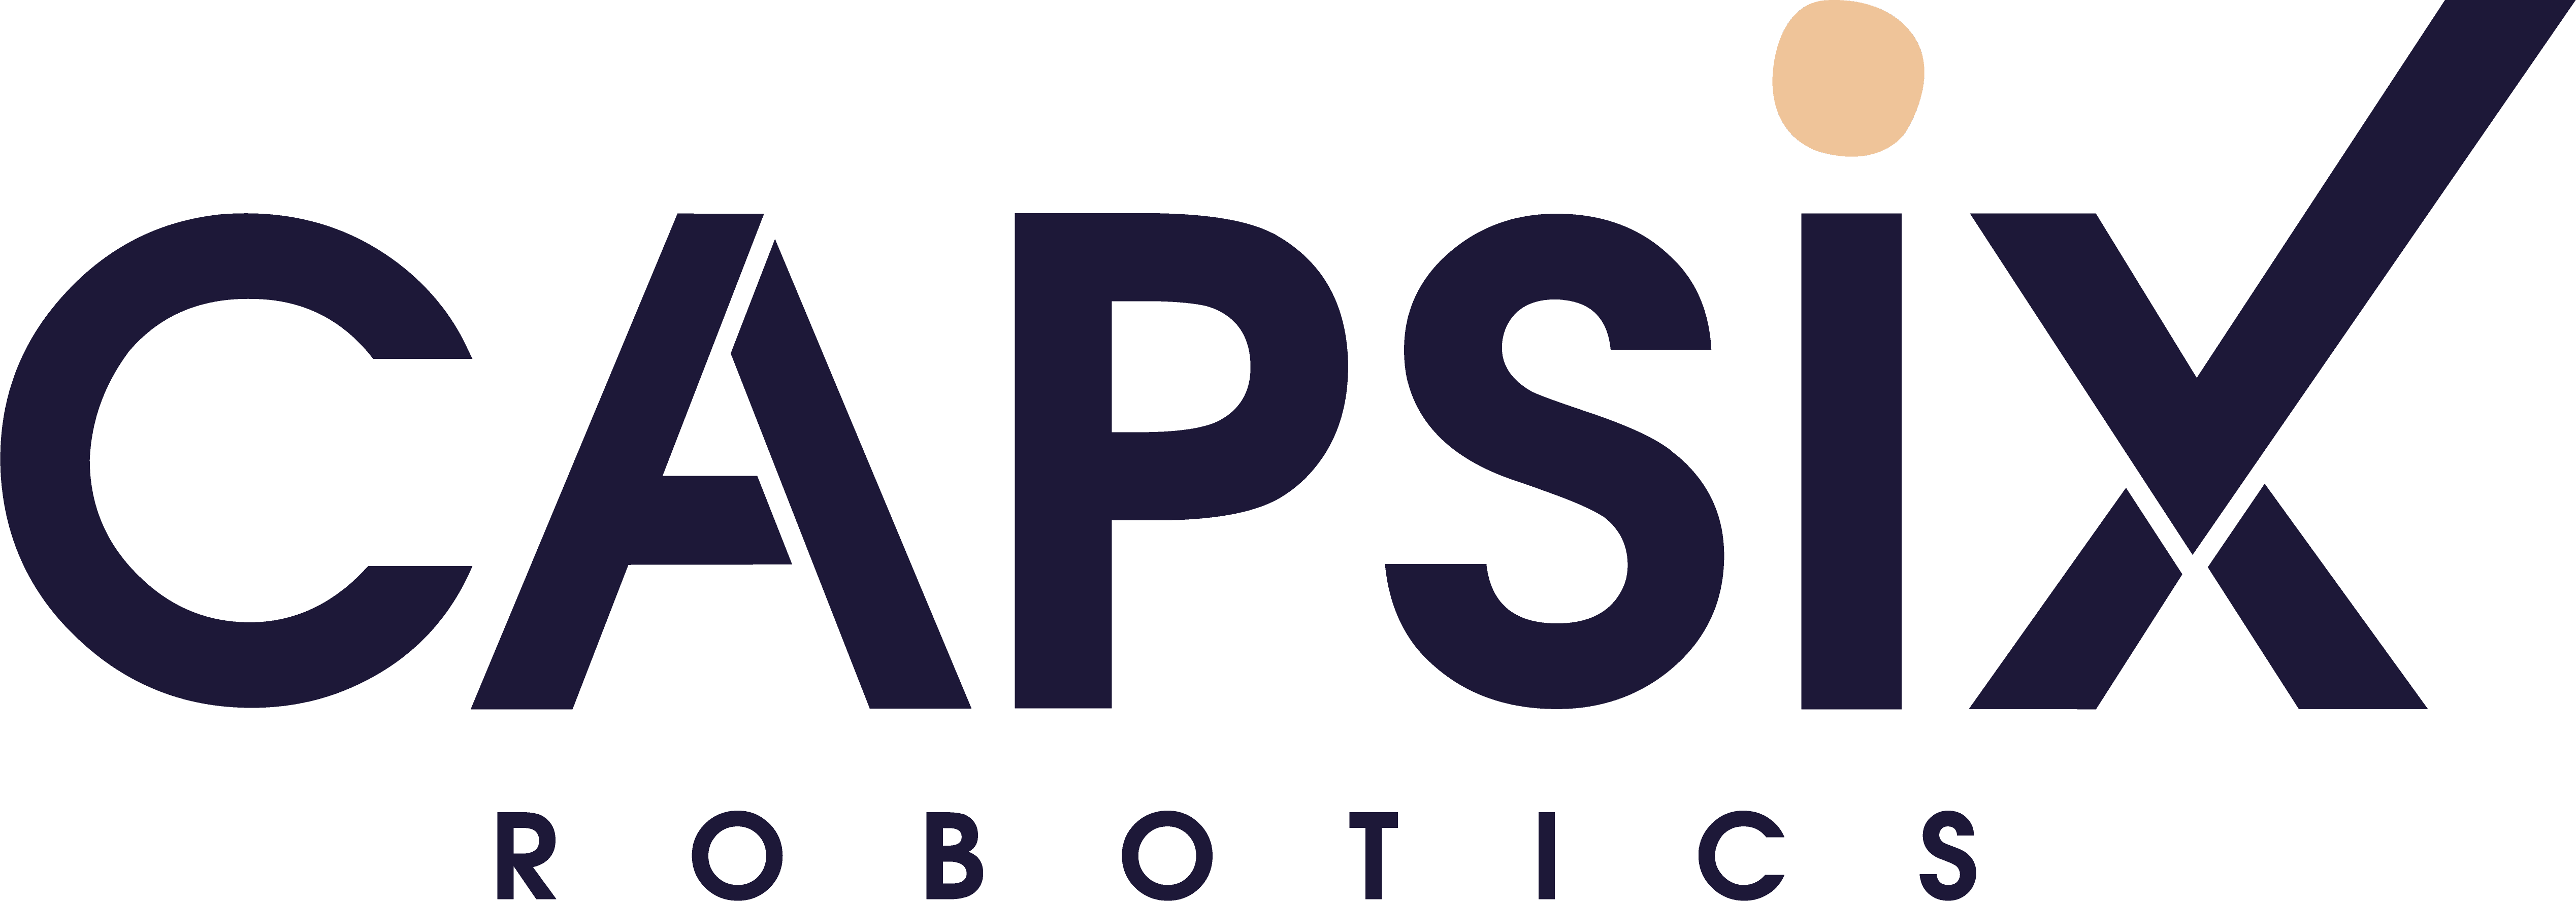 Capsix Robotics massage prix price